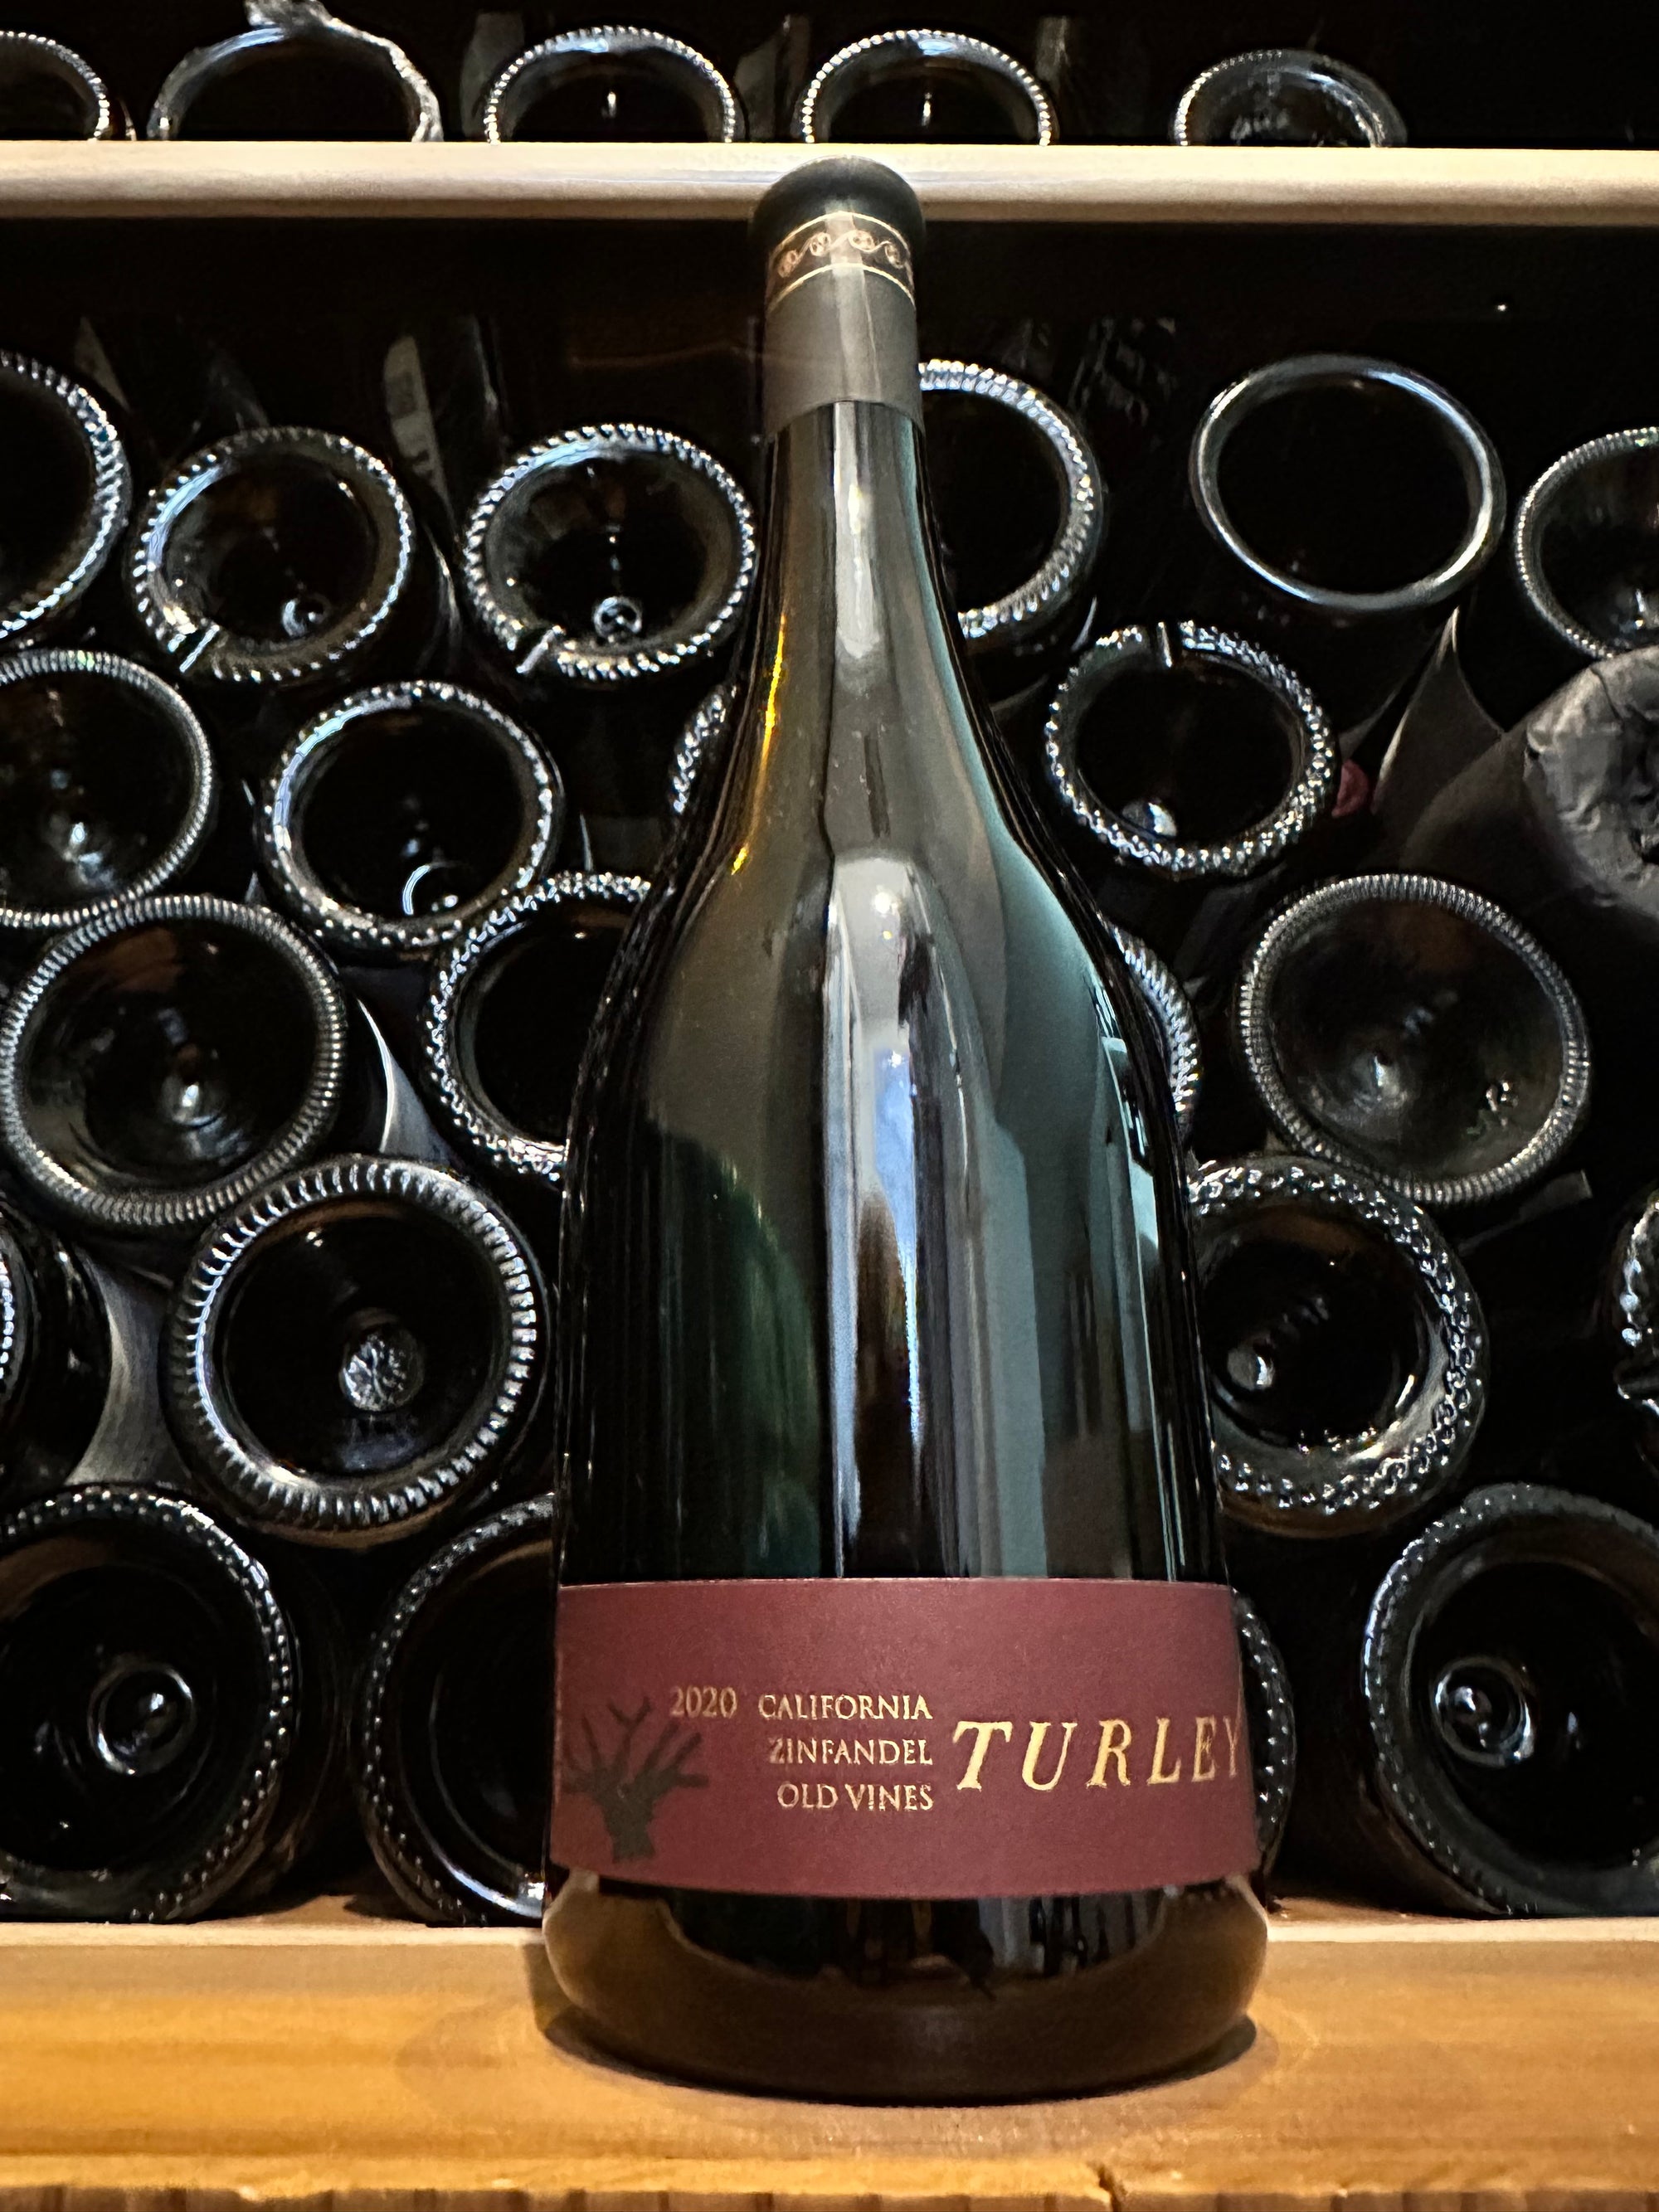 Turley Old Vines Zinfandel 2020